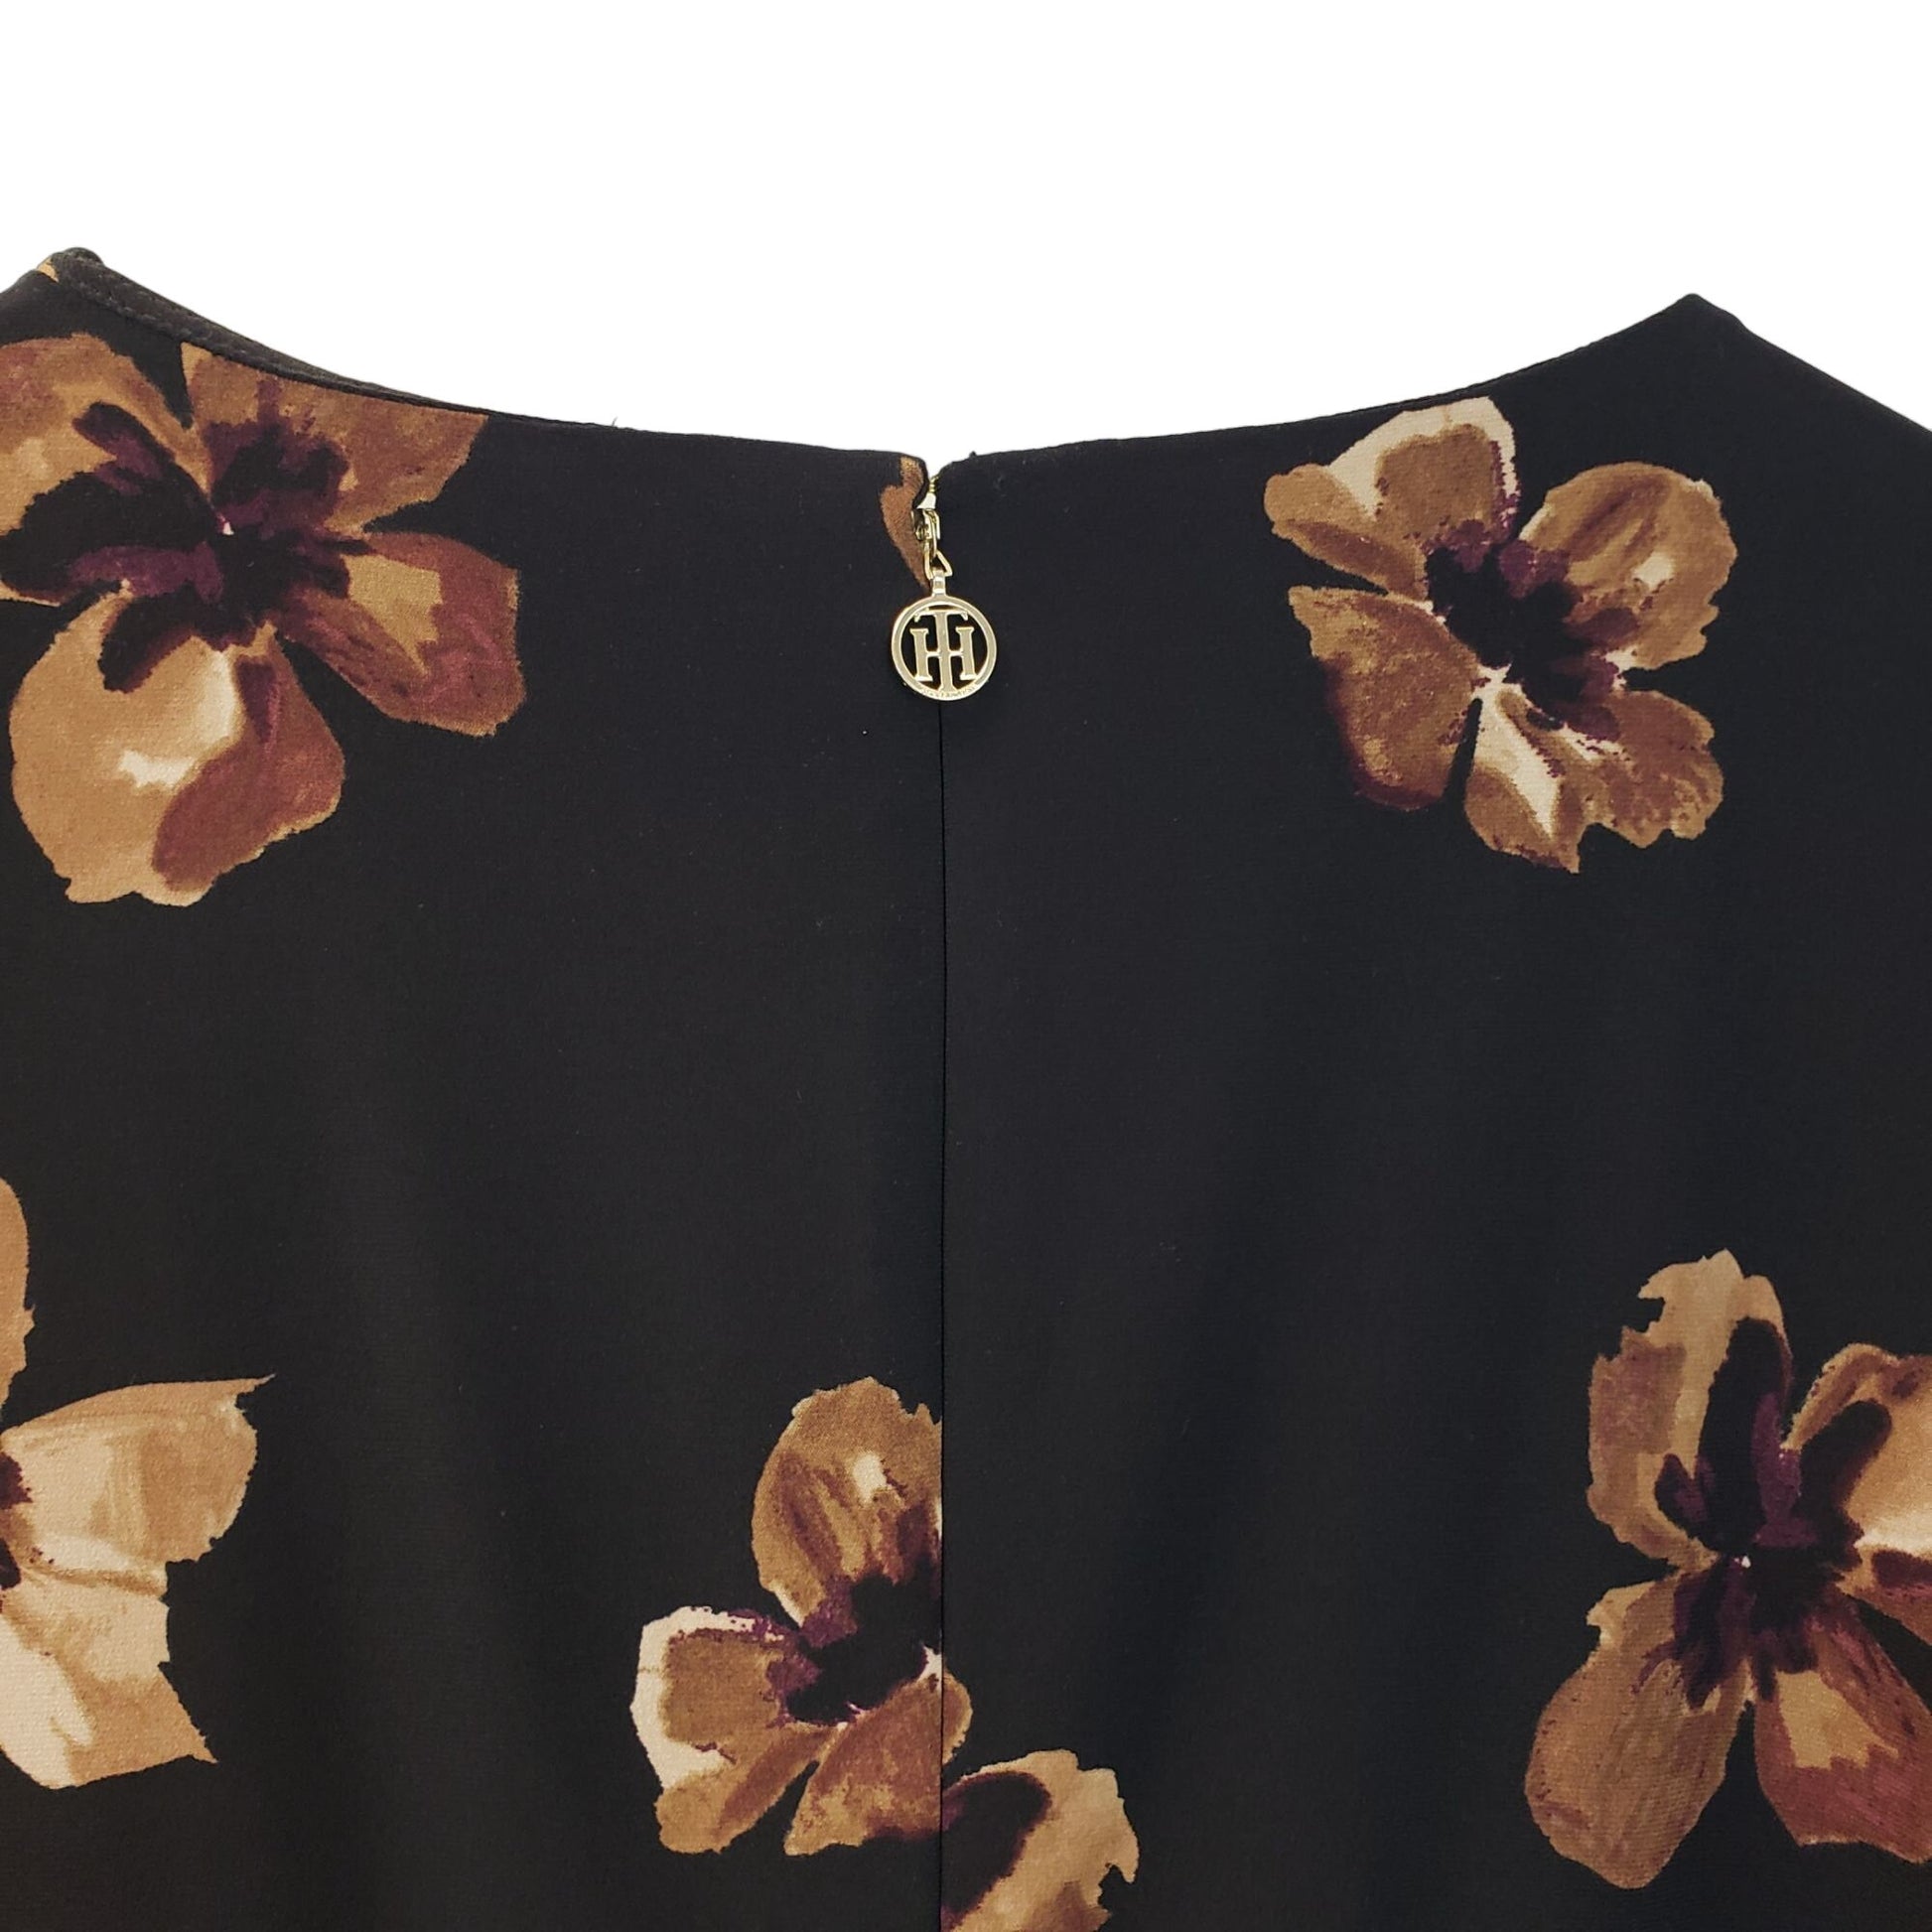 NWT Talbots Floral Tiered Hem Sleeveless Dress Size 10 –